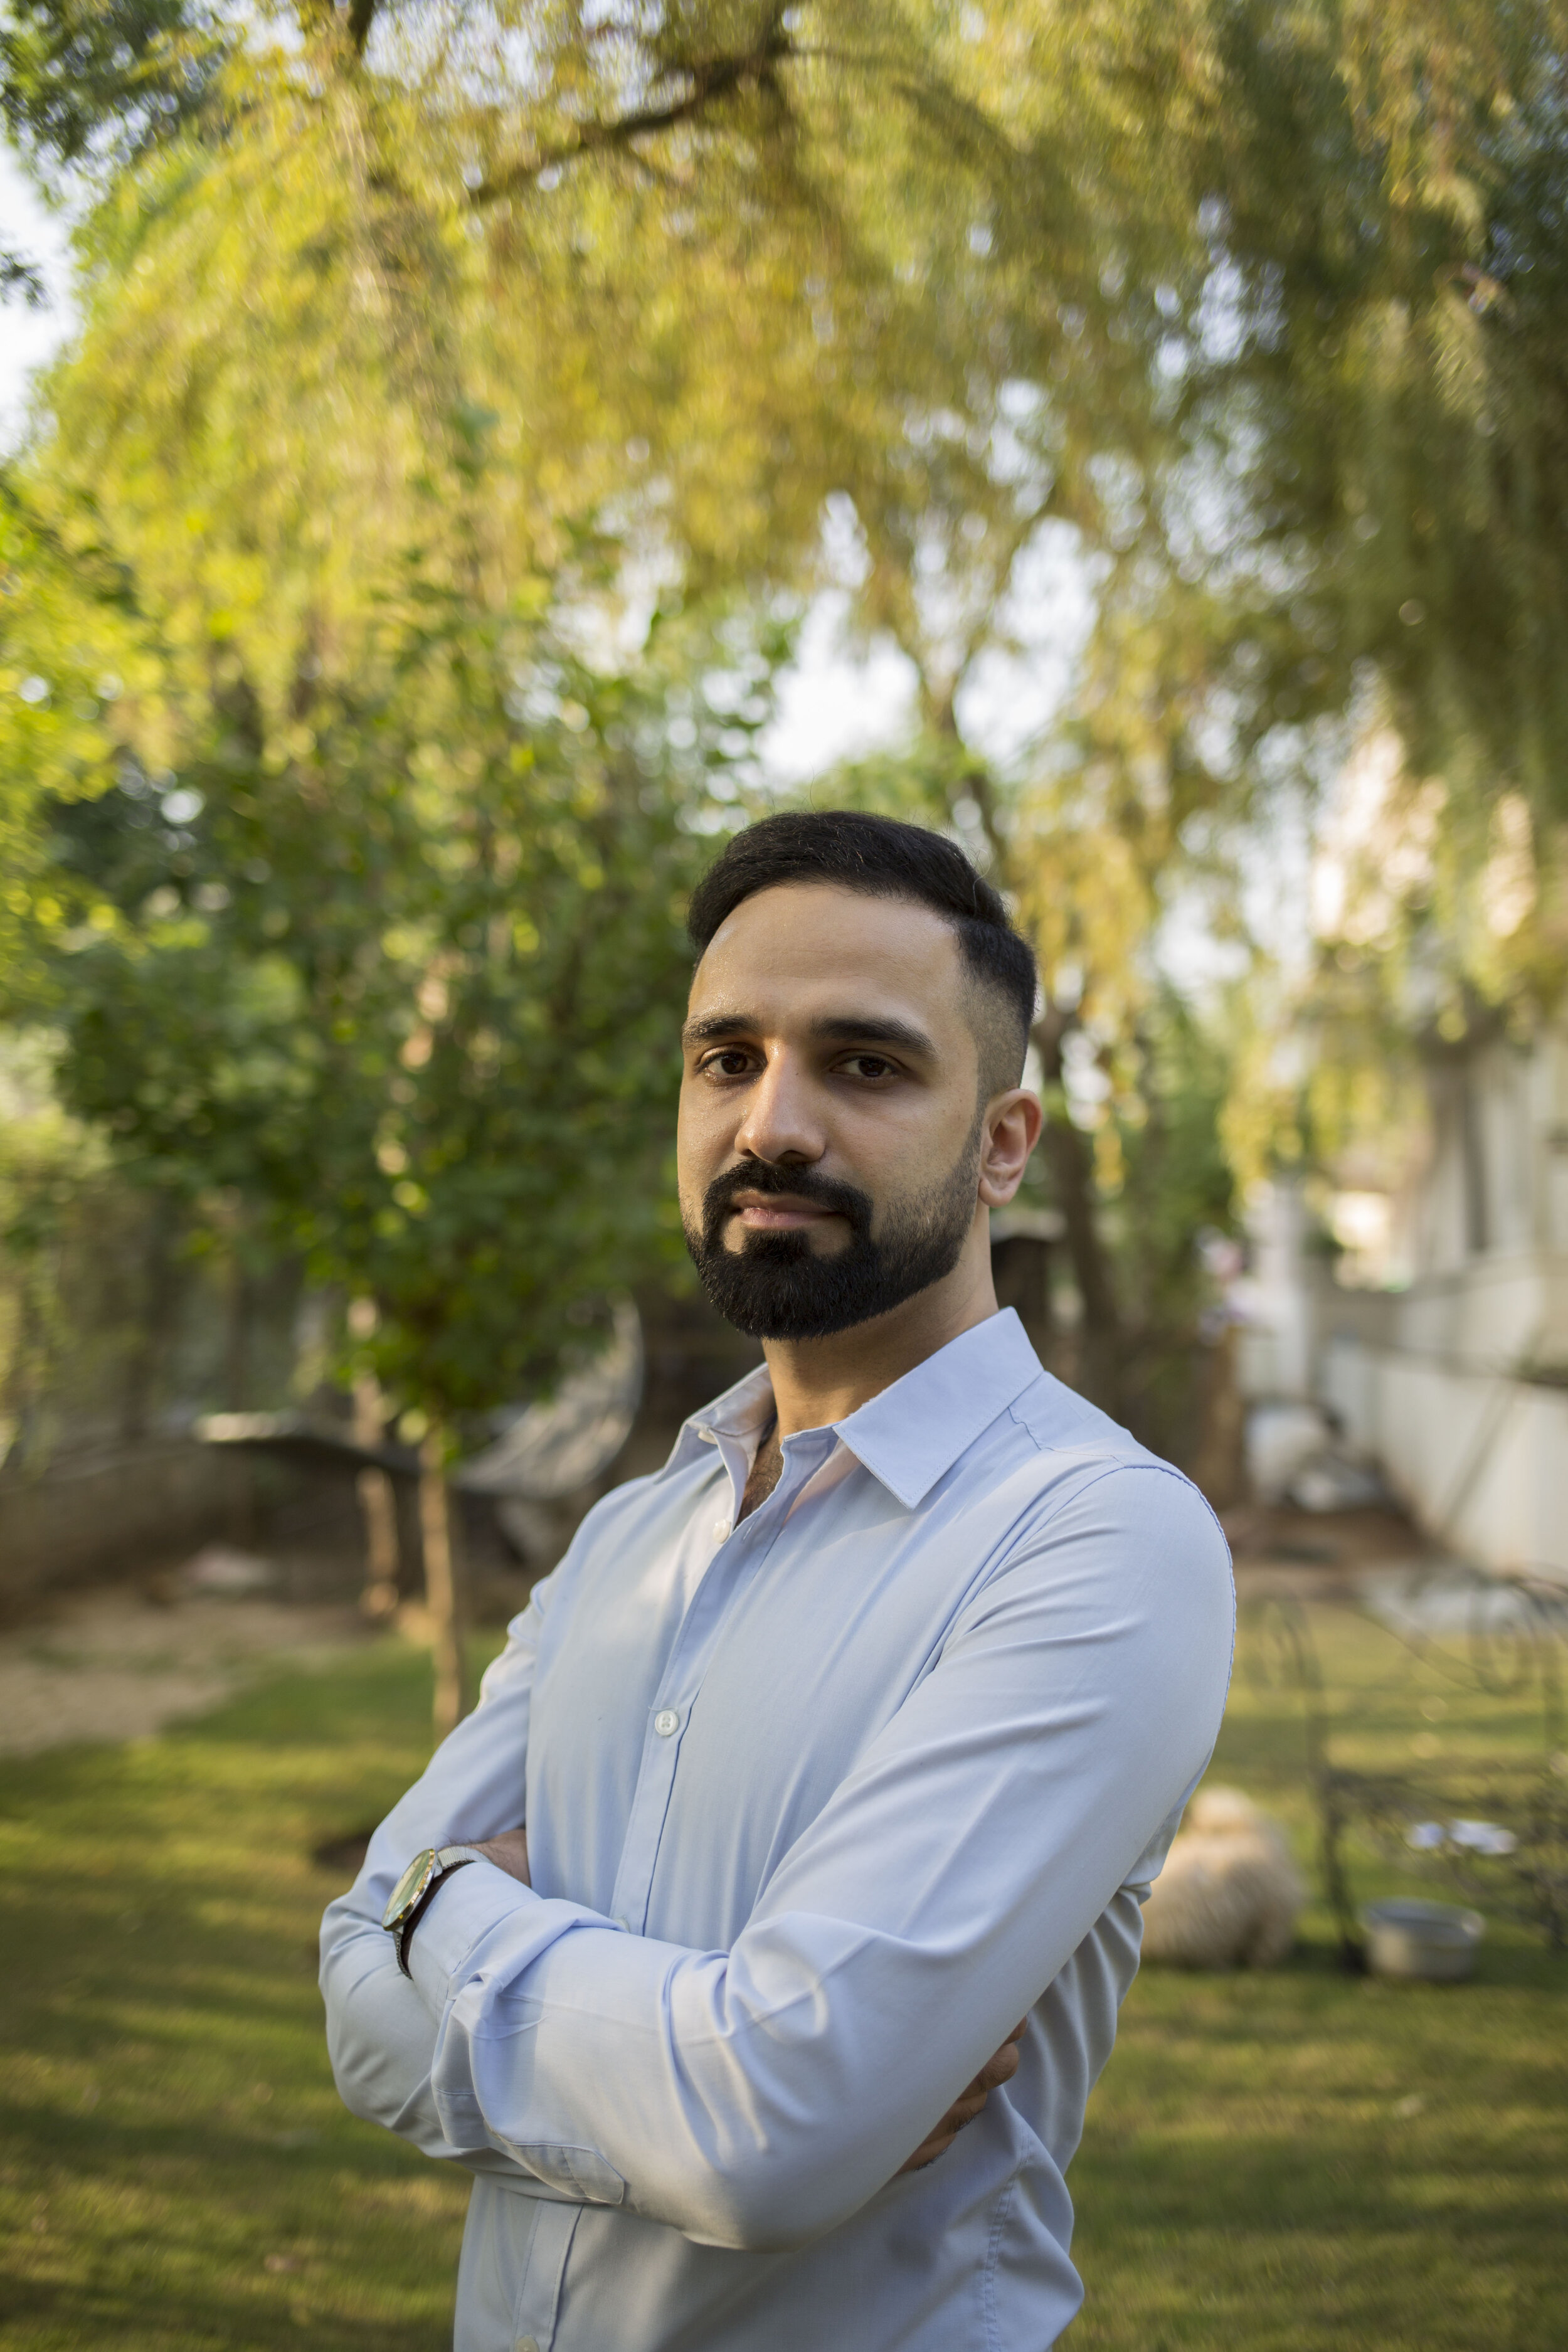  Usama Khilji, director of Bolo Bhi, a Pakistani digital rights think tank. 